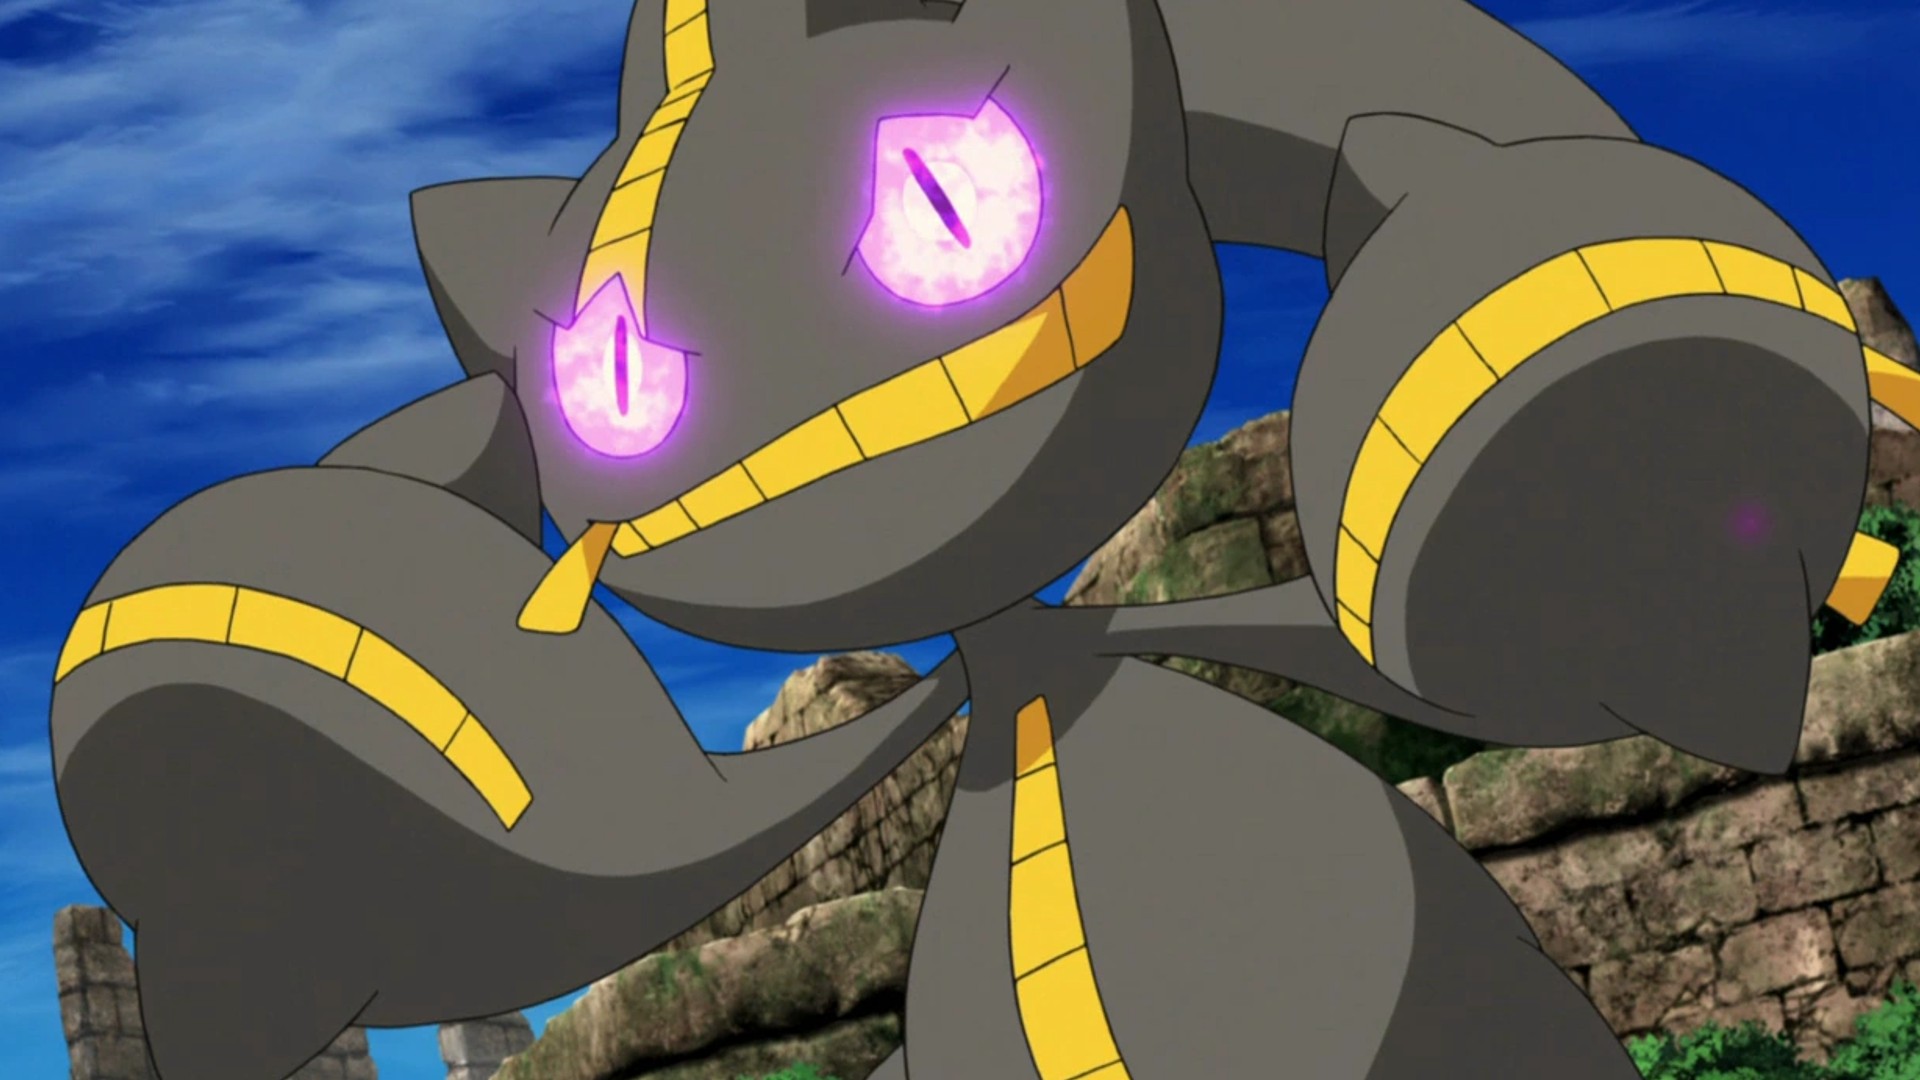 Pokémon Go Mega Gengar weakness, counters and best Gengar moveset